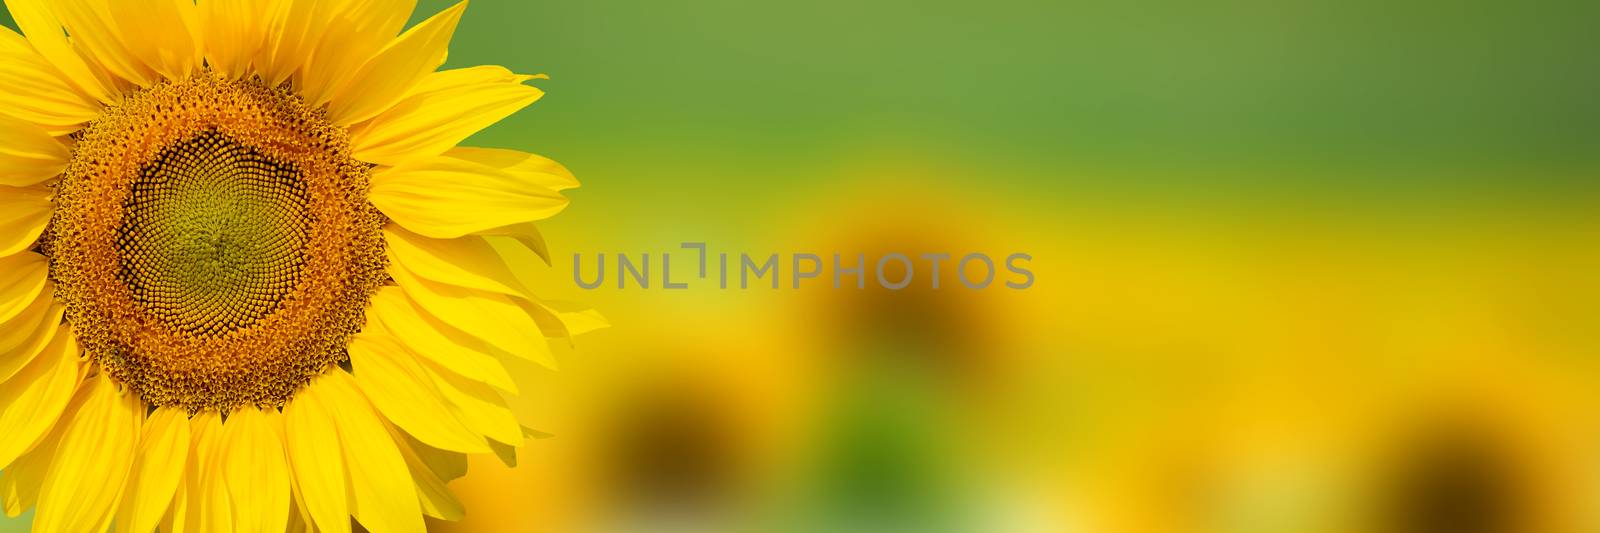 Yellow sunflower background by byrdyak